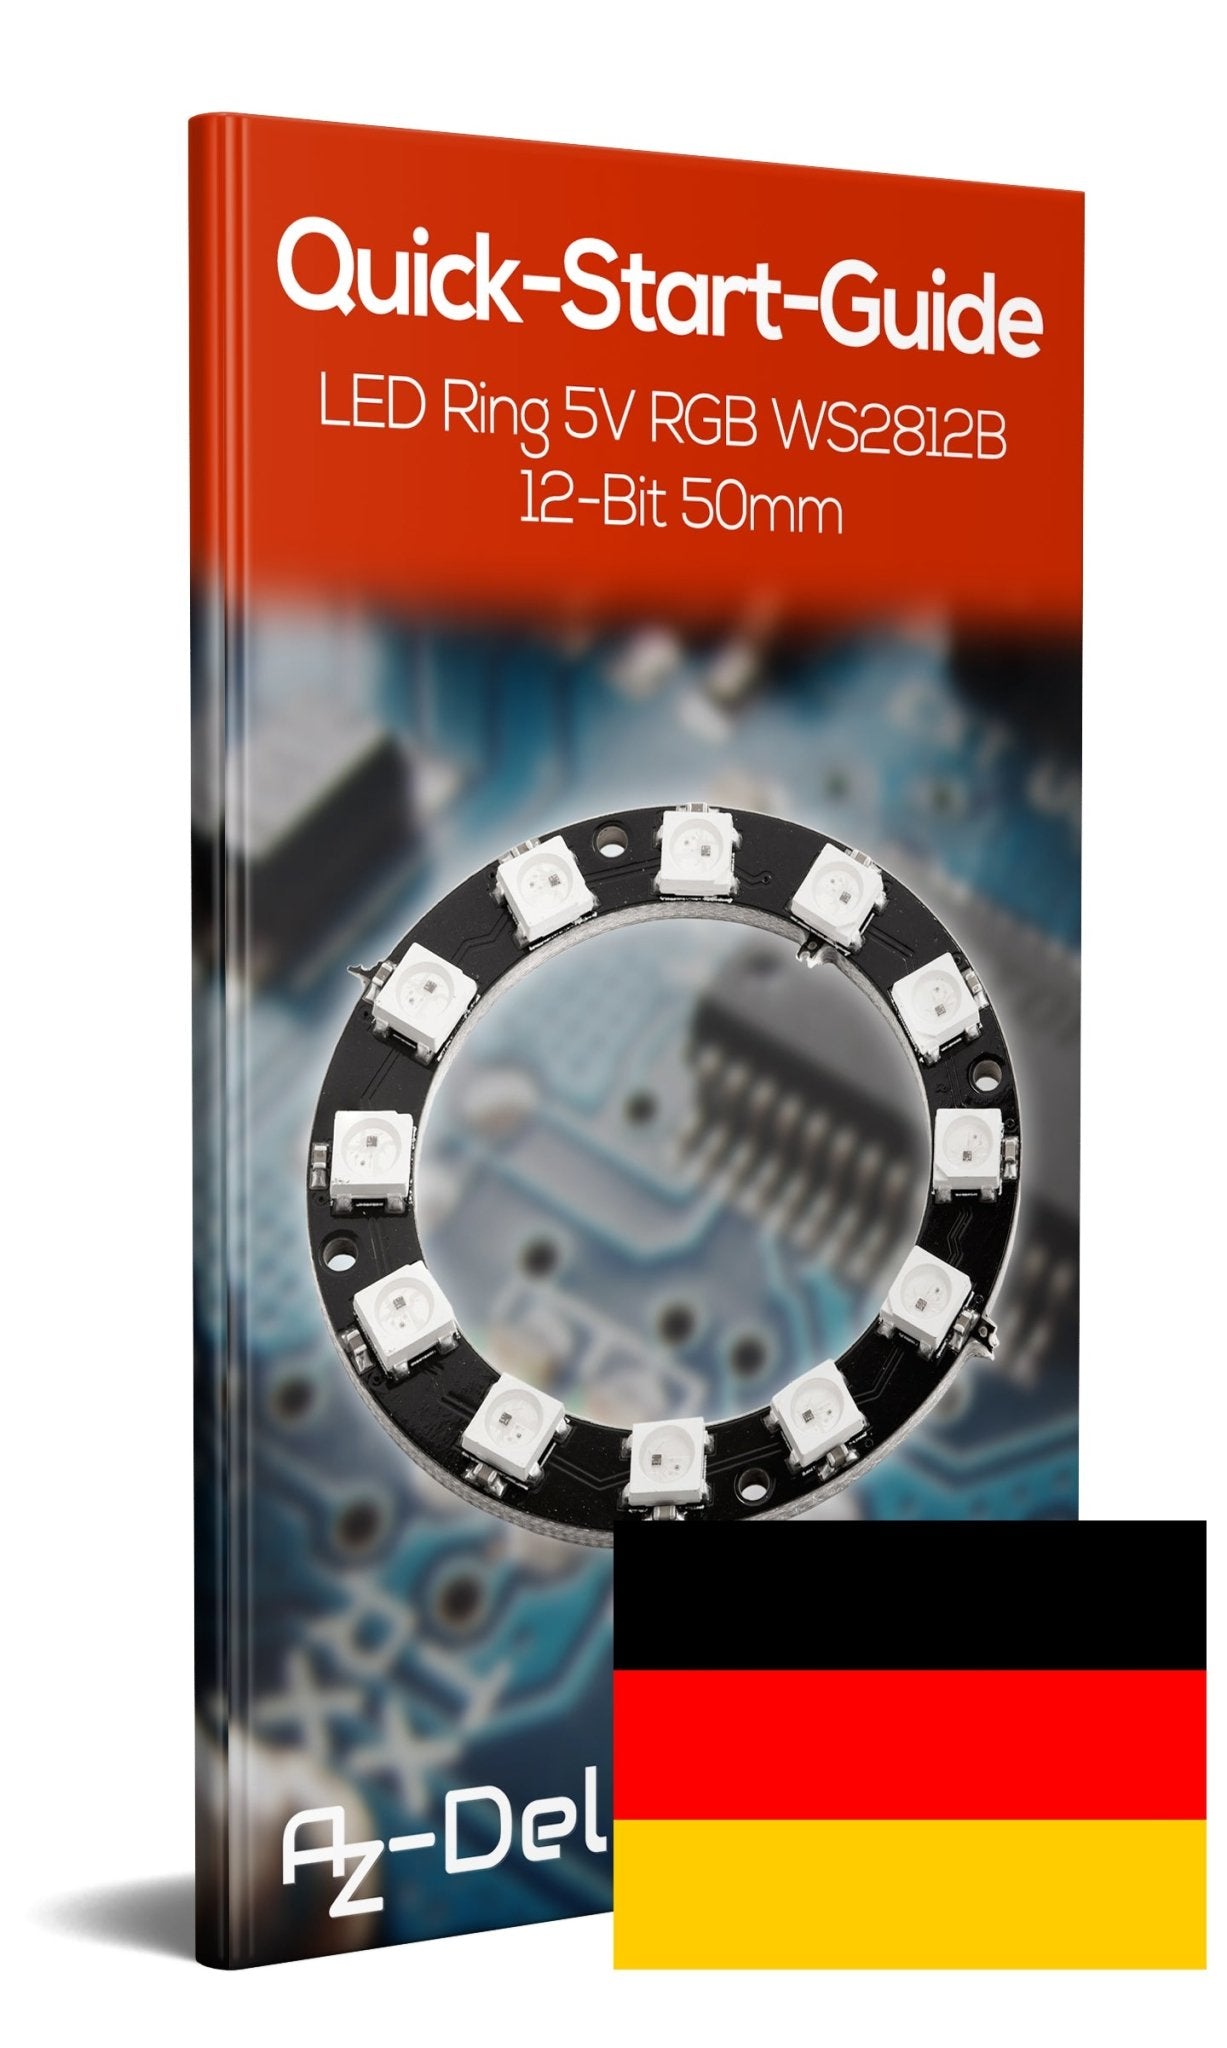 LED Ring 5V RGB WS2812B 12-Bit 50mm - AZ-Delivery